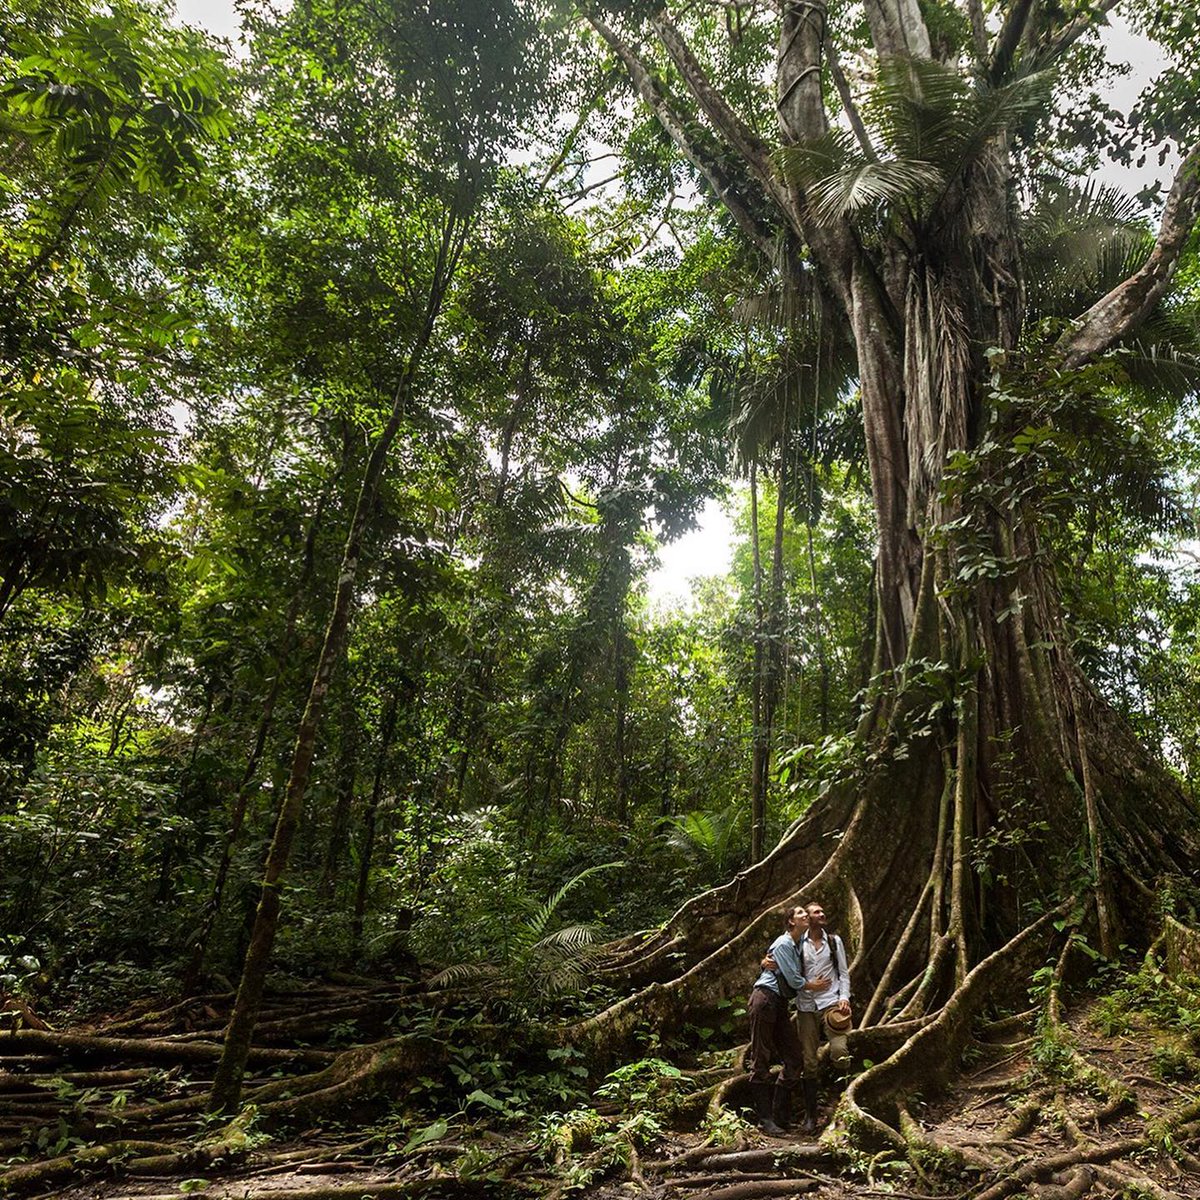 Life is all around you in the Amazon rainforest.  ​​​​​​​​
🌐More Info: n9.cl/xubpq
#Cuscojo #PeruvianAmazon #AmazonRainforest #ManuNationalPark #Amazon #PeruAdventure #PeruTravel #InfoMachuPicchu #IAmATraveler #DiscoverSouthAmerica #TasteMadeTravel #Peru #TravelMore